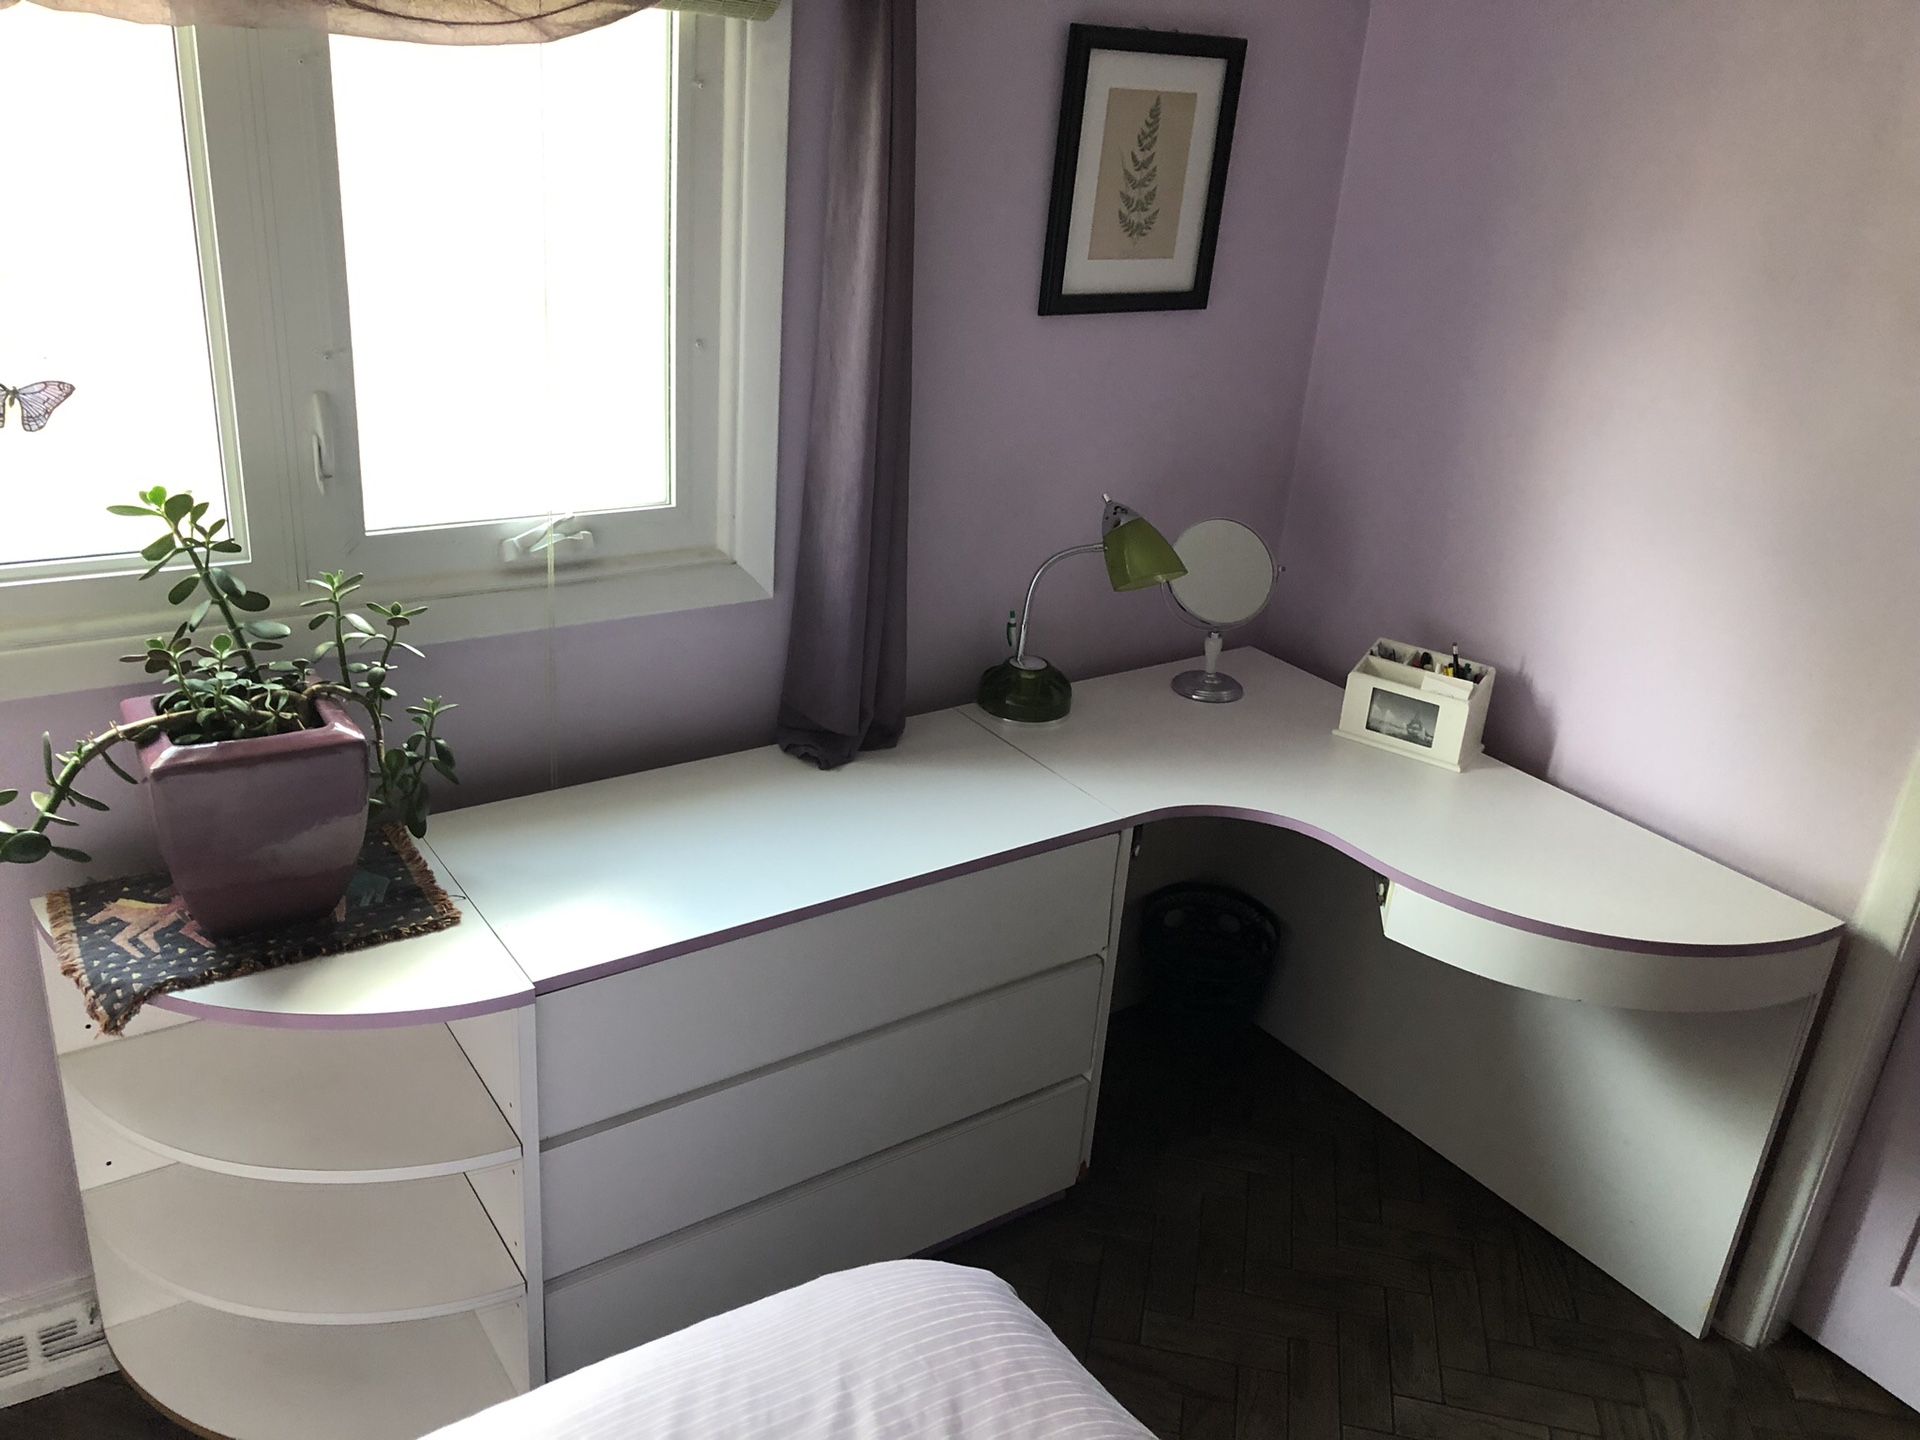 Bedroom Set - Corner desk - 2 matching nightstand dressers - buy separate or as a set